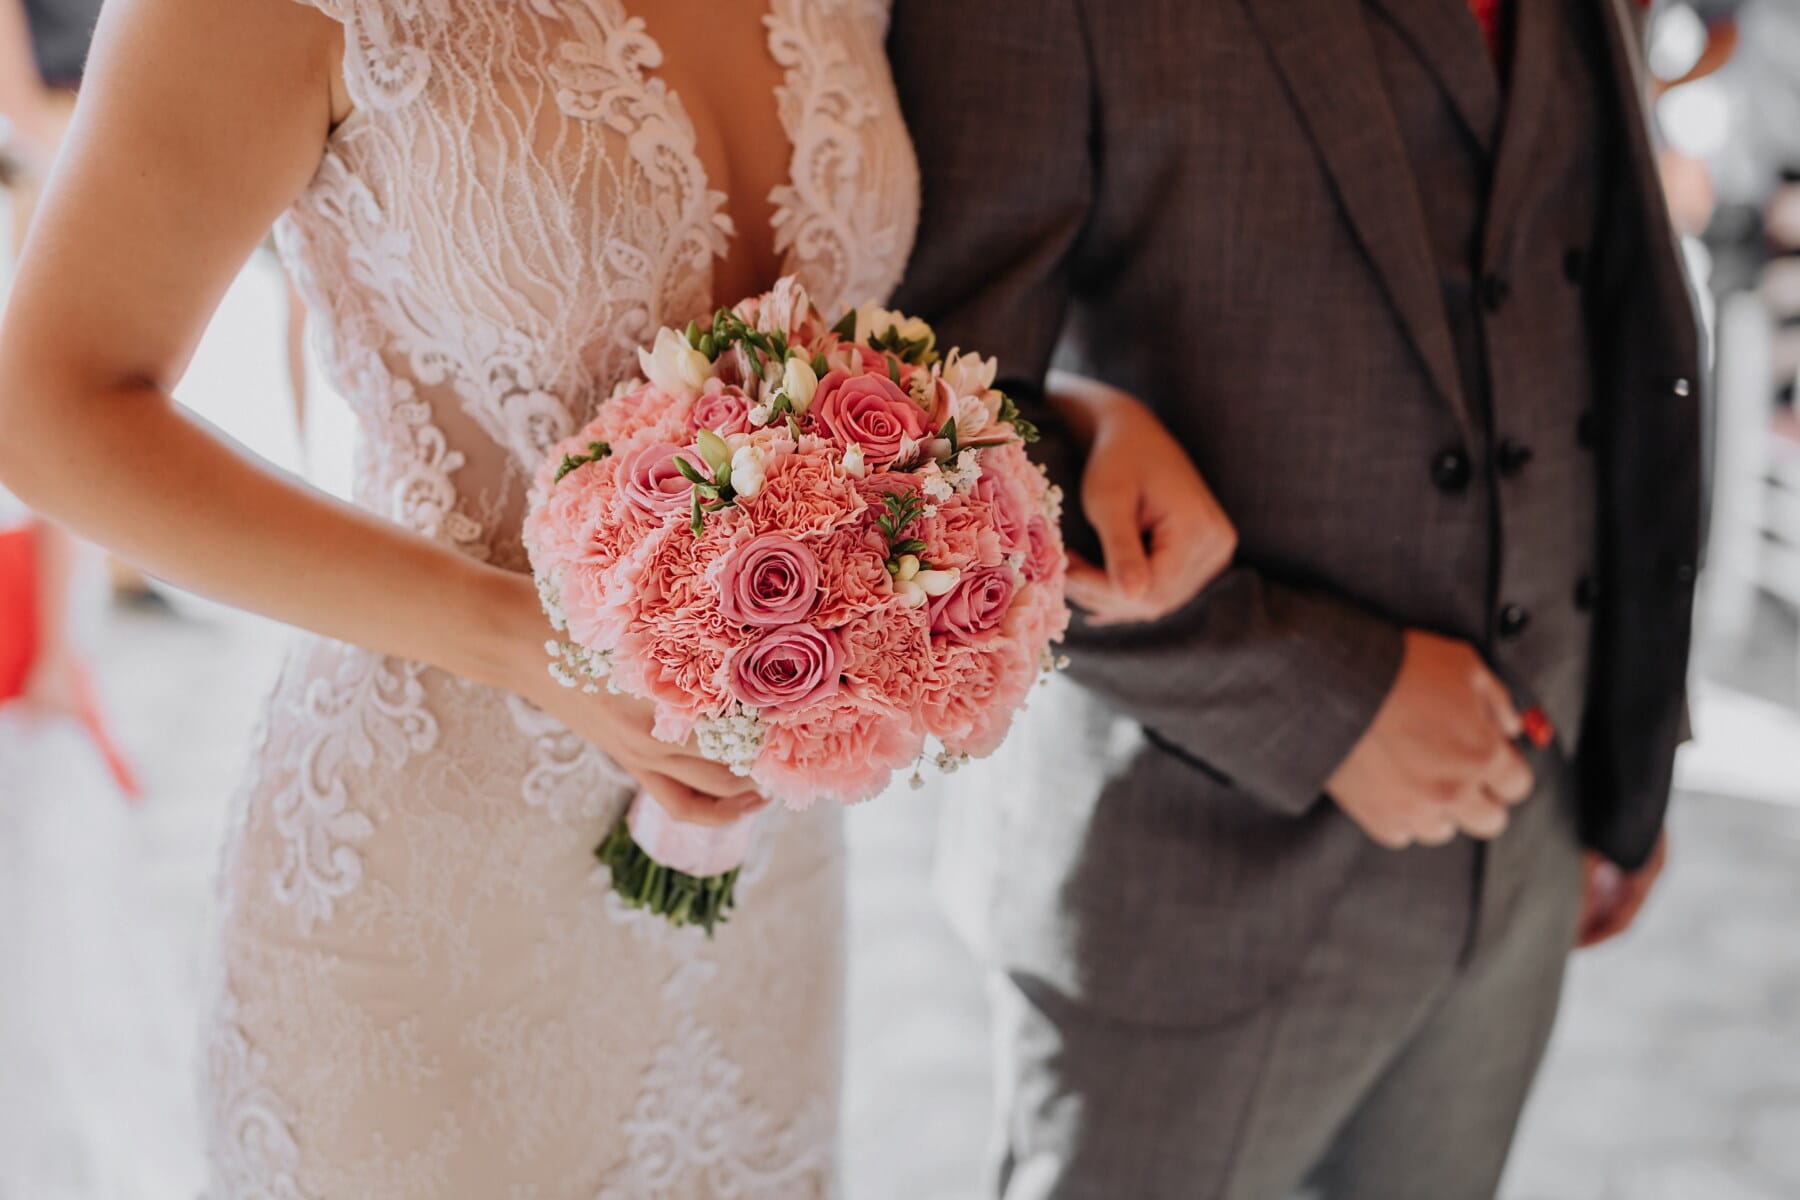 bride, ceremony, groom, wedding, holding hands, flowers, romance, bouquet, love, woman